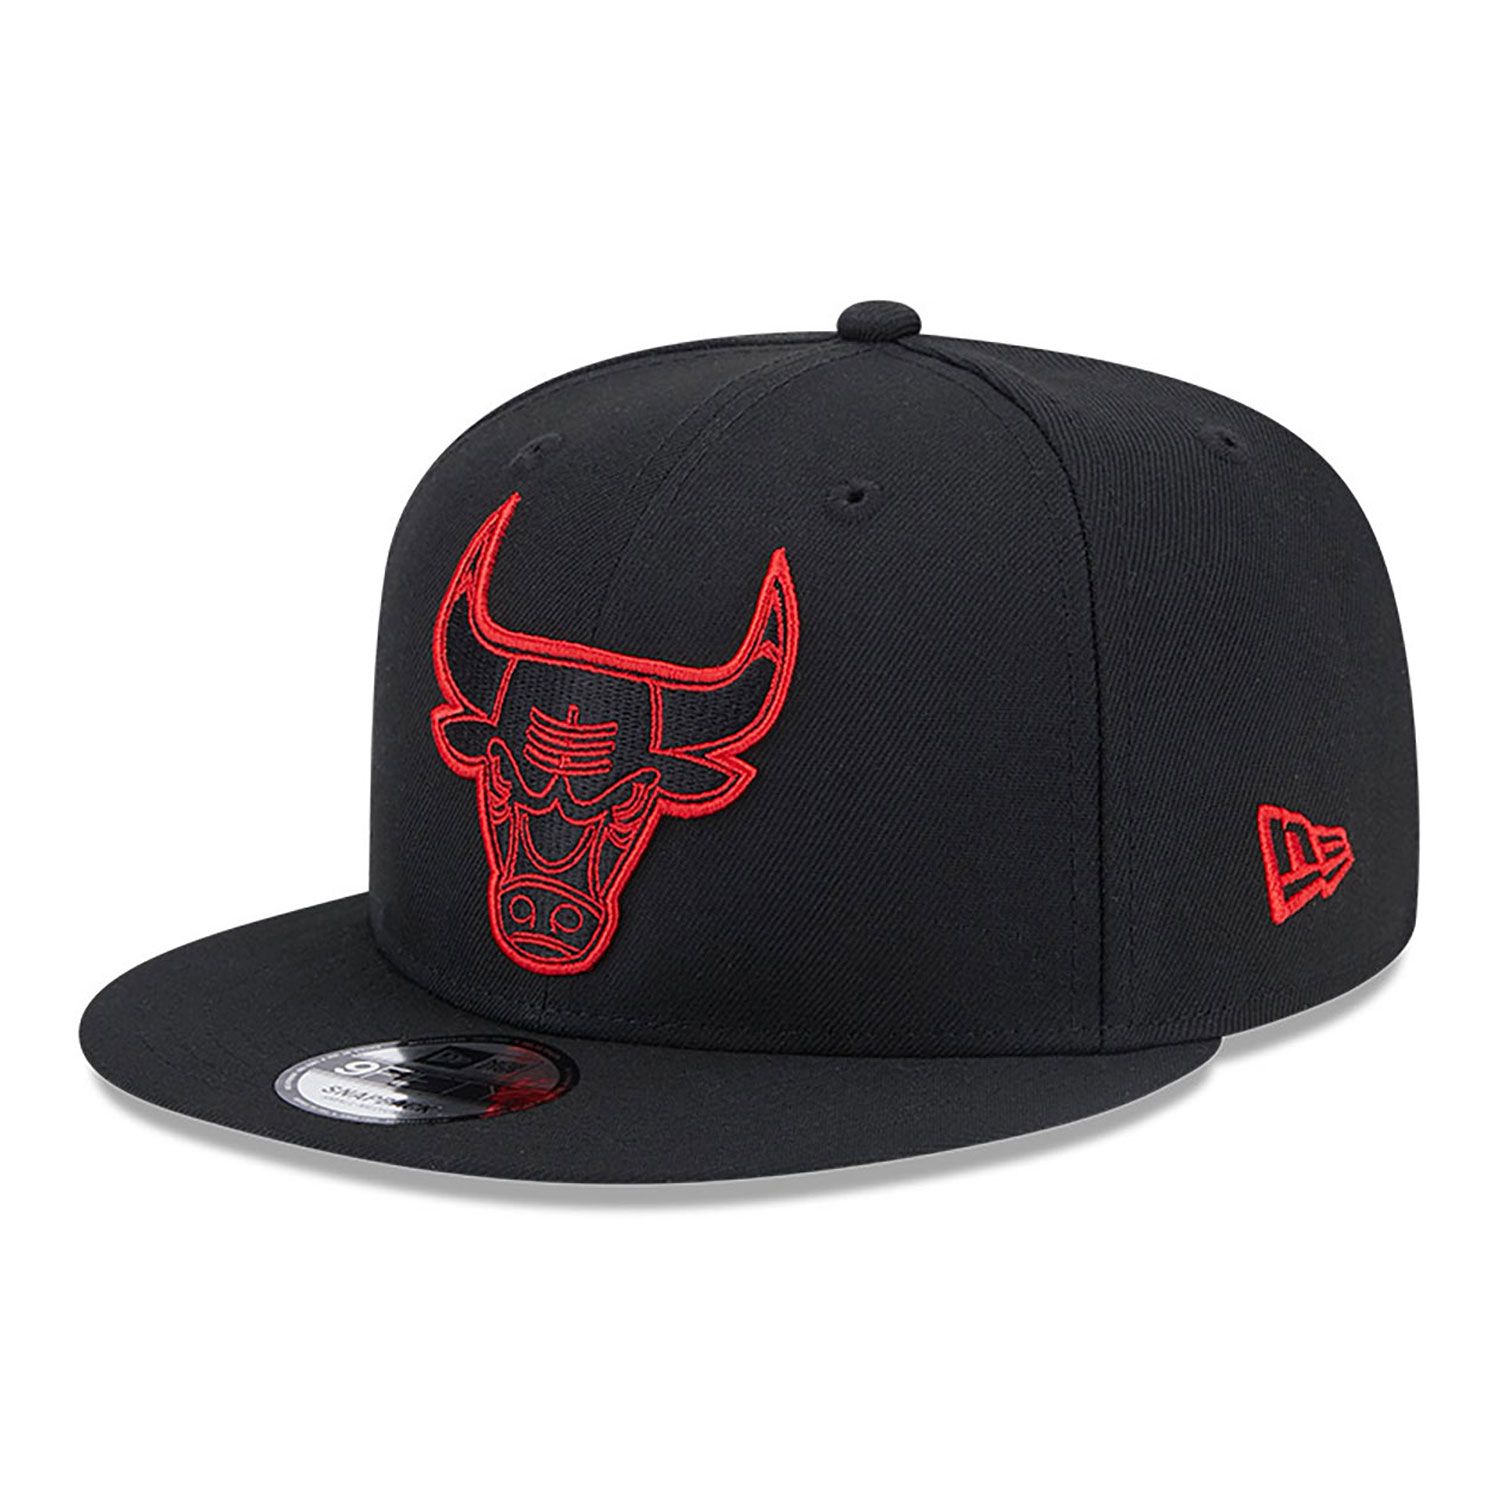 Chicago Bulls Repreve Black 9FIFTY Snapback Cap